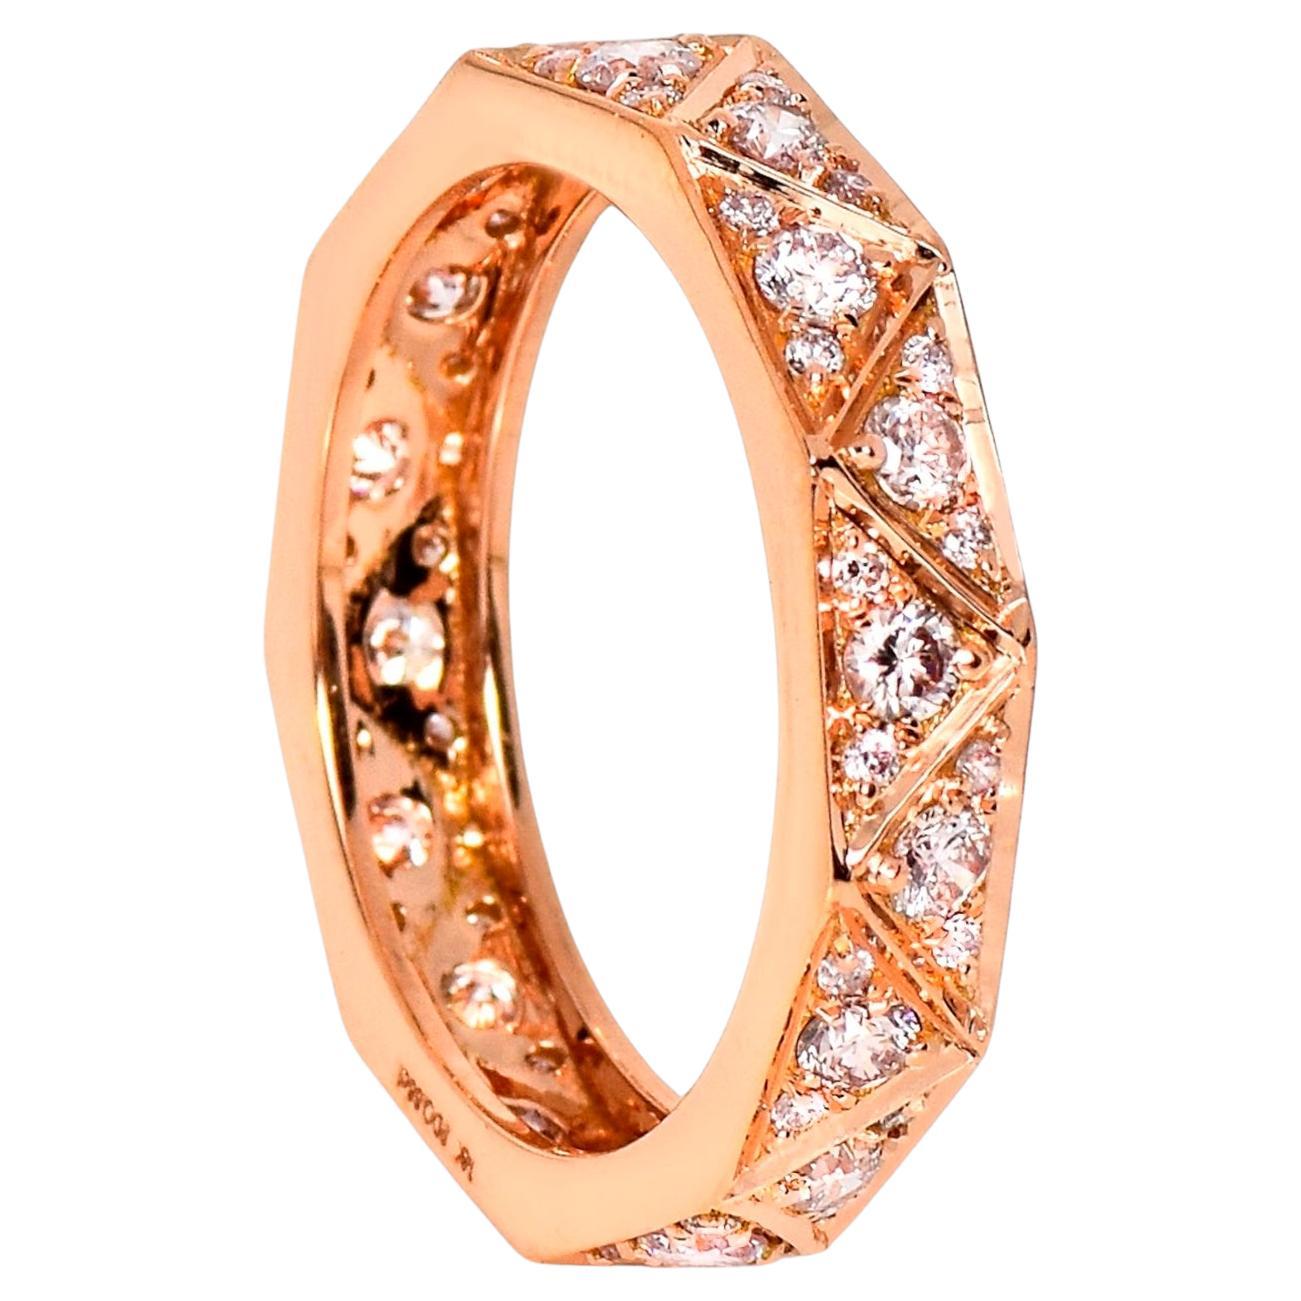 IGI 14K 0.78 ct Natural Pink Diamonds Art Deco Eternity Engagement Ring